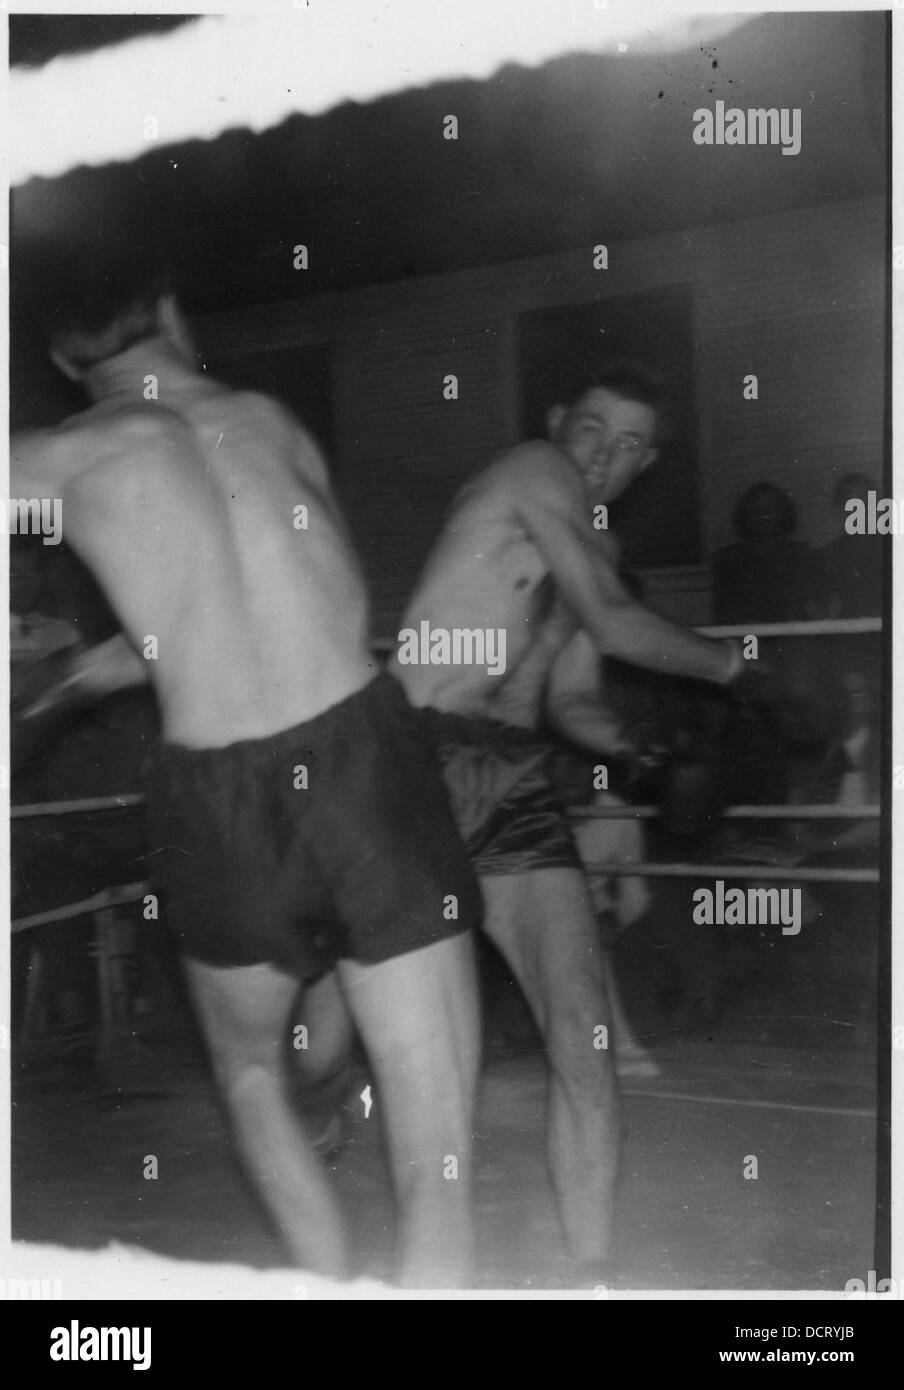 Boxing match in progress 285873 Stock Photo Alamy